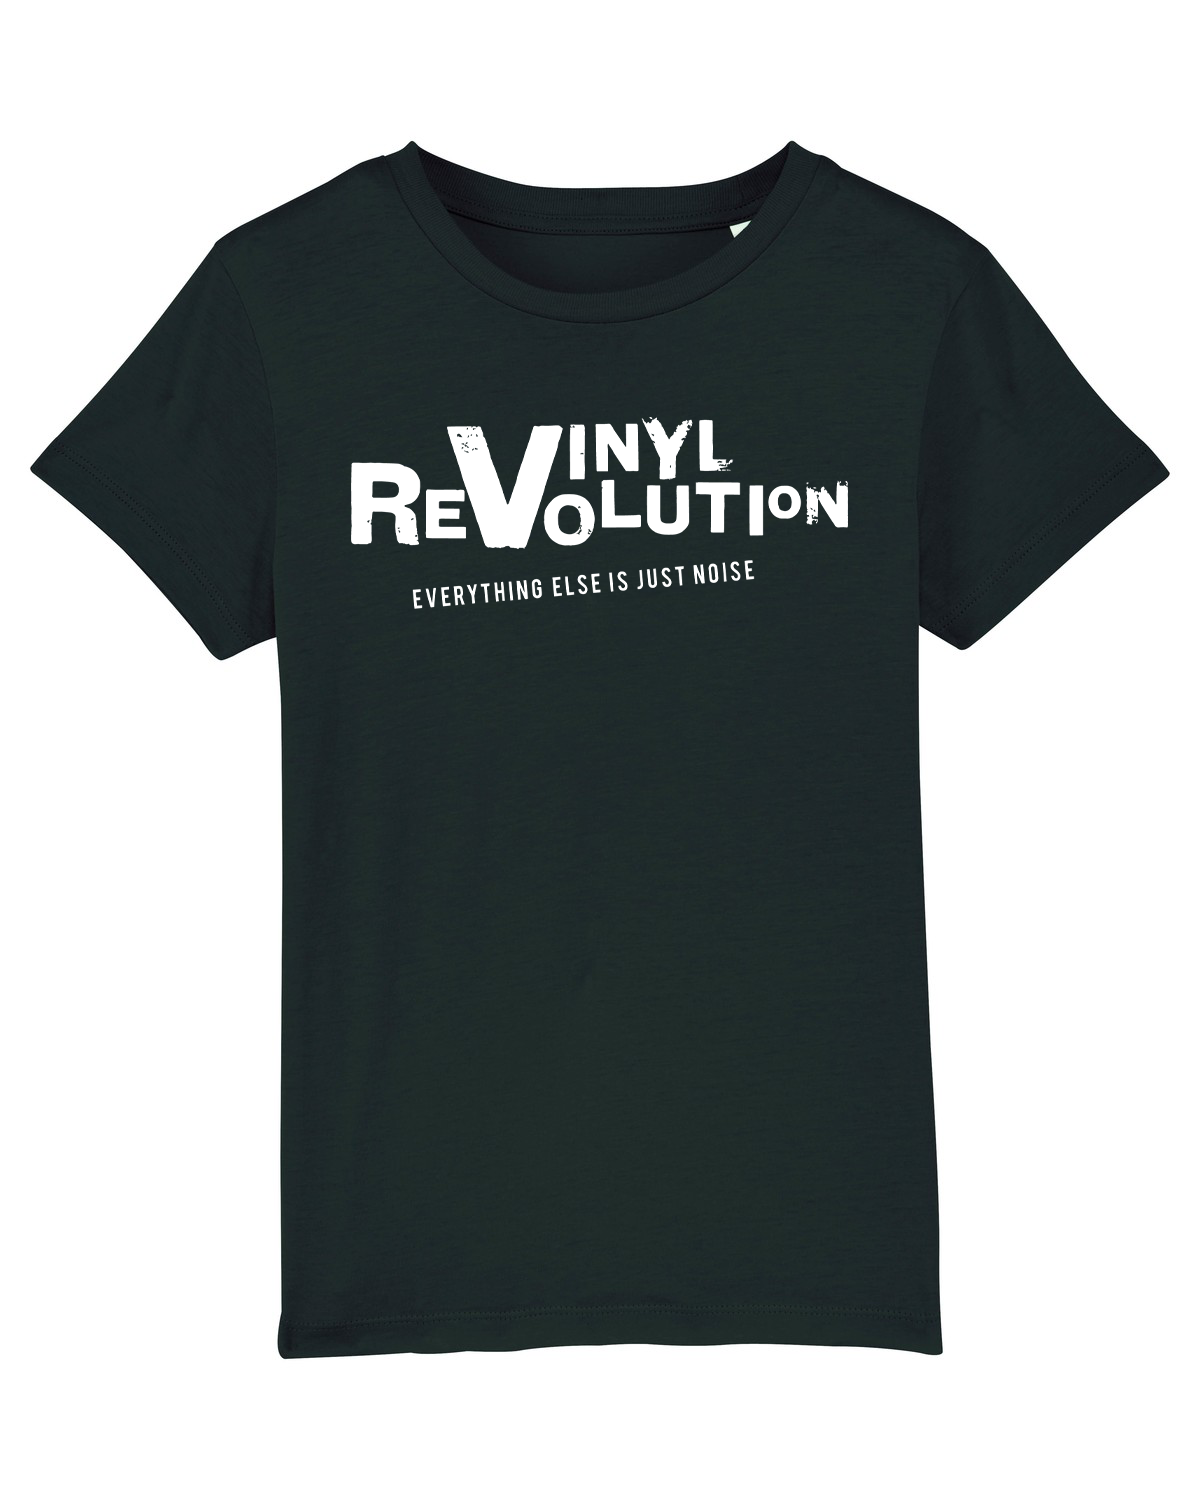 'Vinyl Revolution' Organic Kids T-shirt